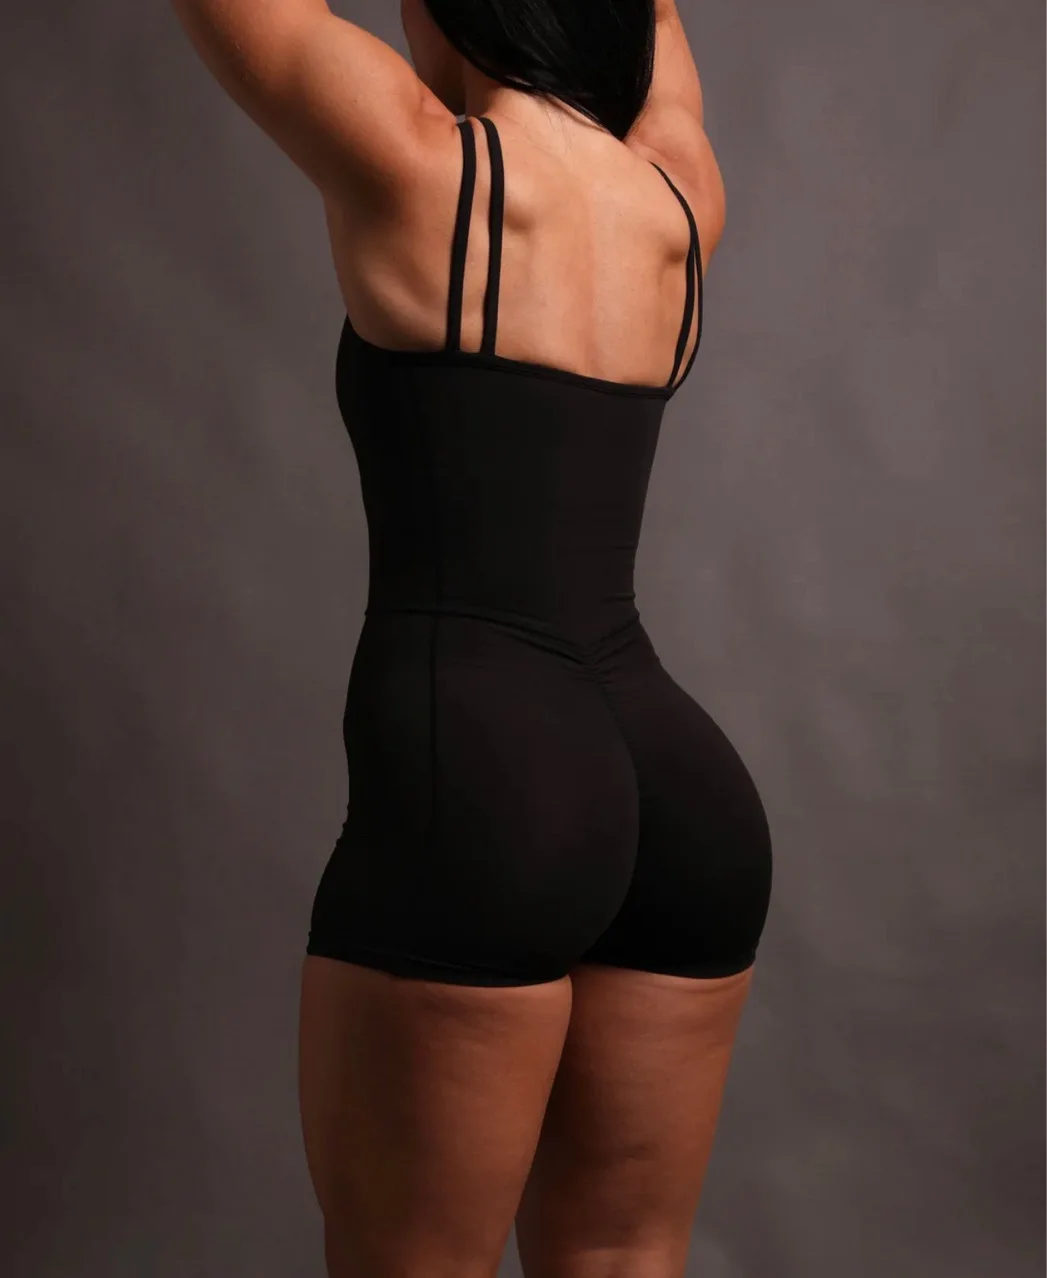 Darc Women Energy Bodysuit Wolf Head Sport Vertical Hardcore Black Fitness Suit Double Shoulder Belt Nude Feel Hip Lift Clothing